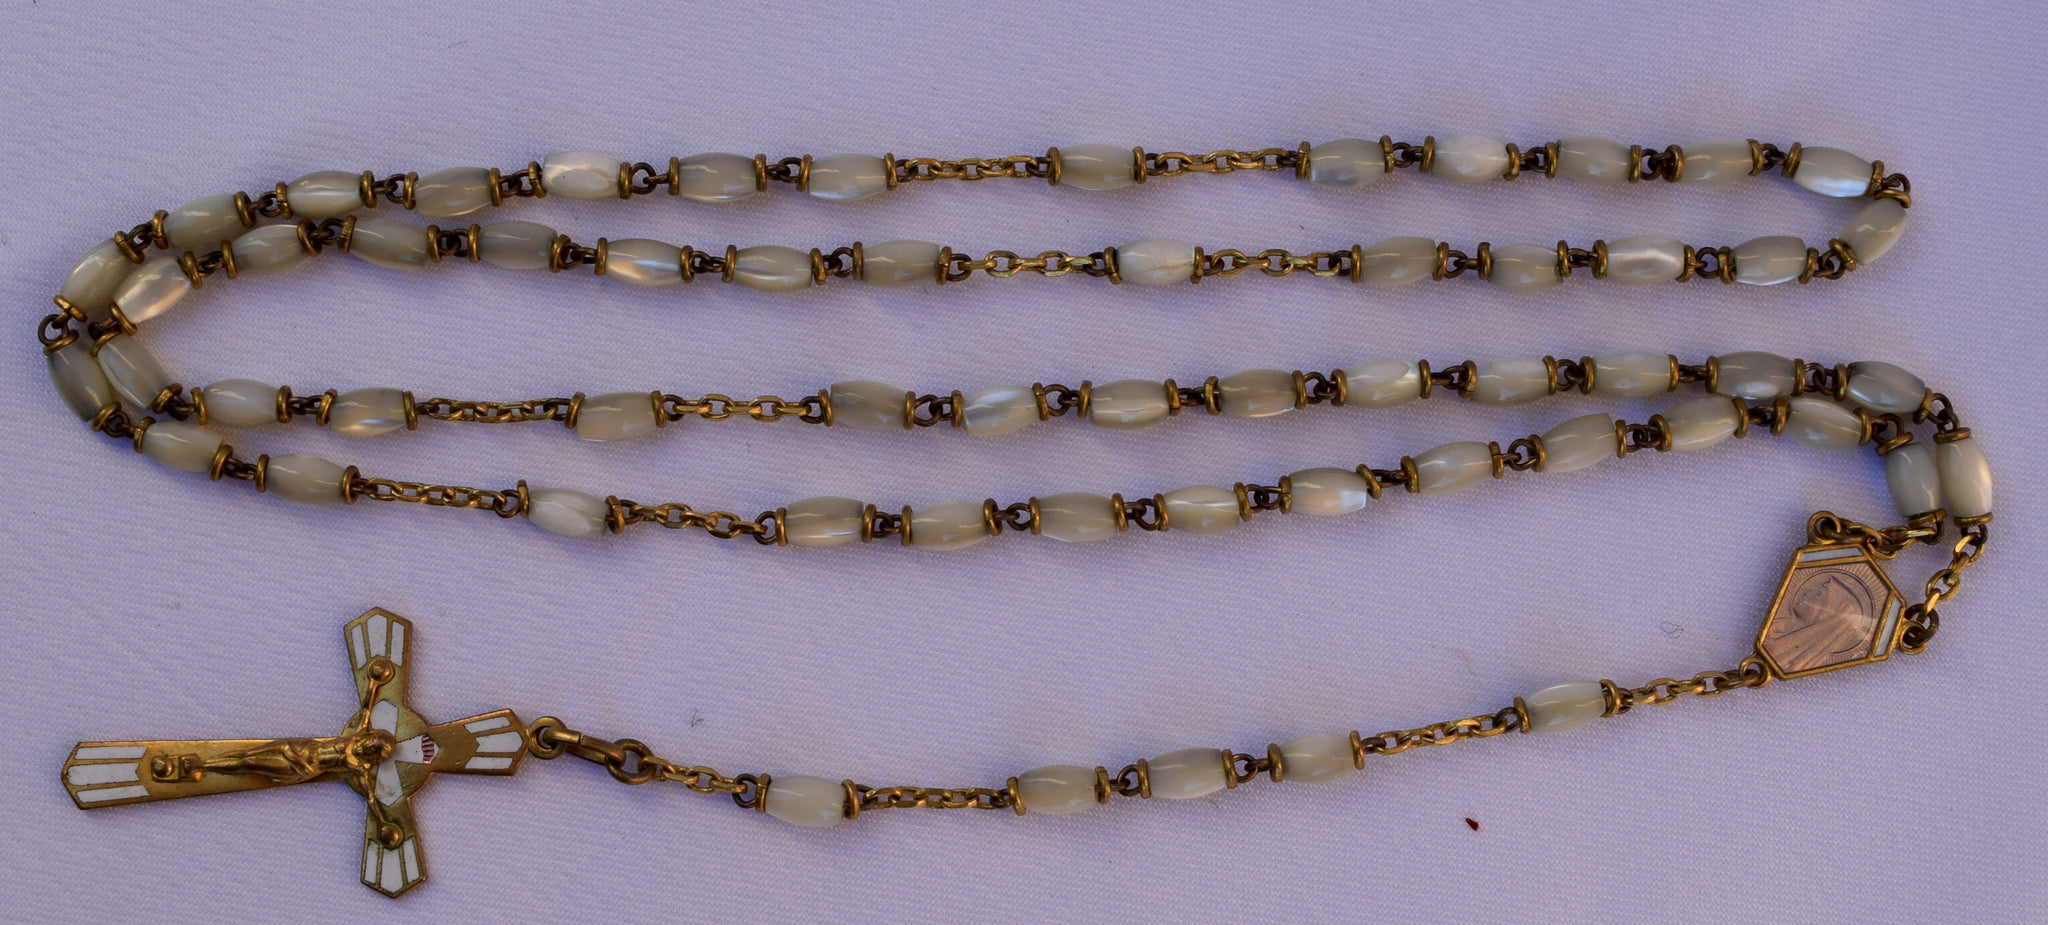 Vintage MOP Rosary - Charmantiques